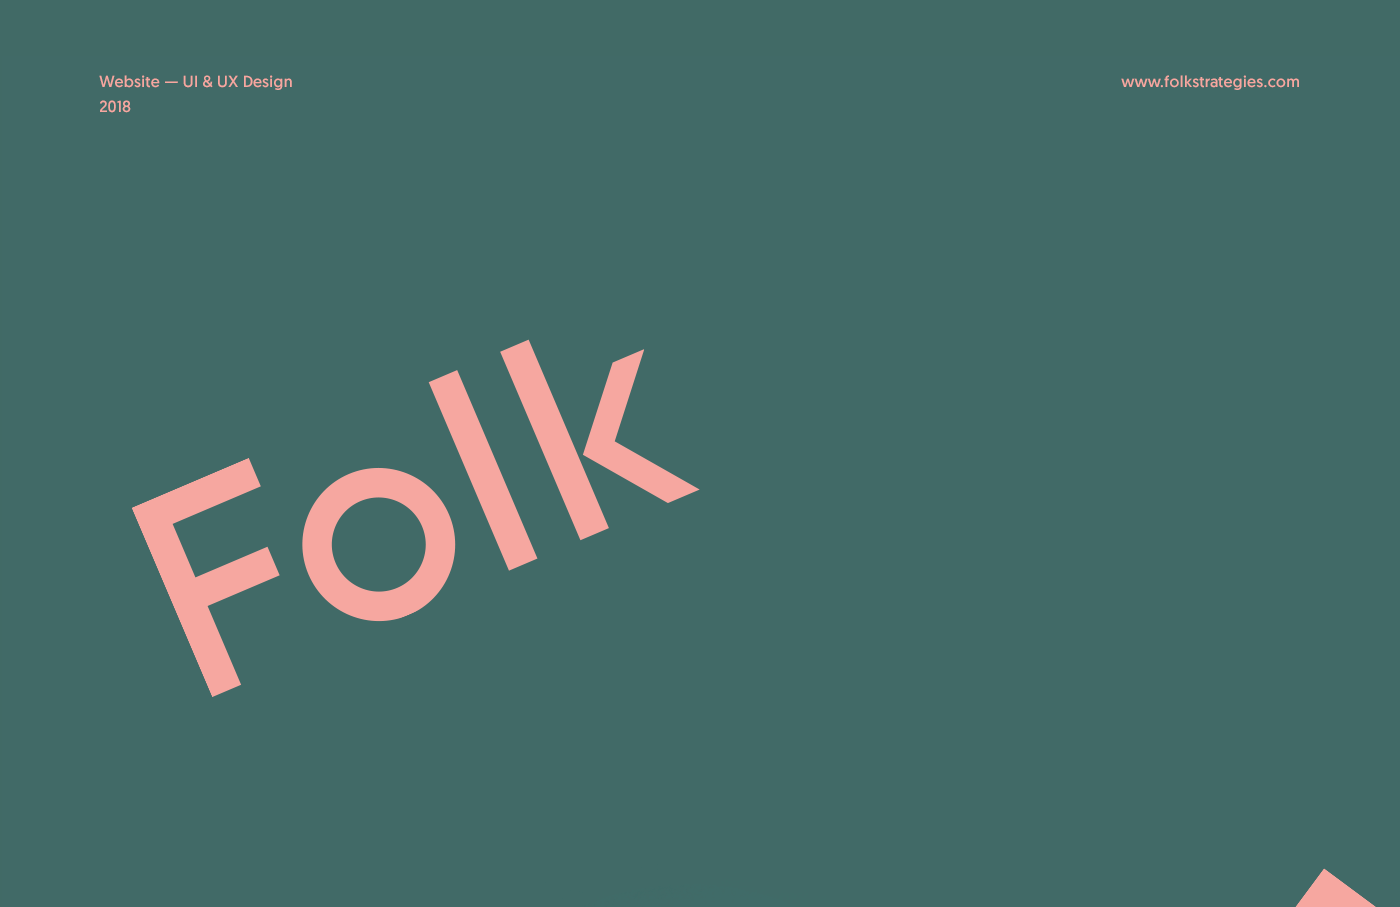 Homepages design idea #422: Folk Strategies - Website